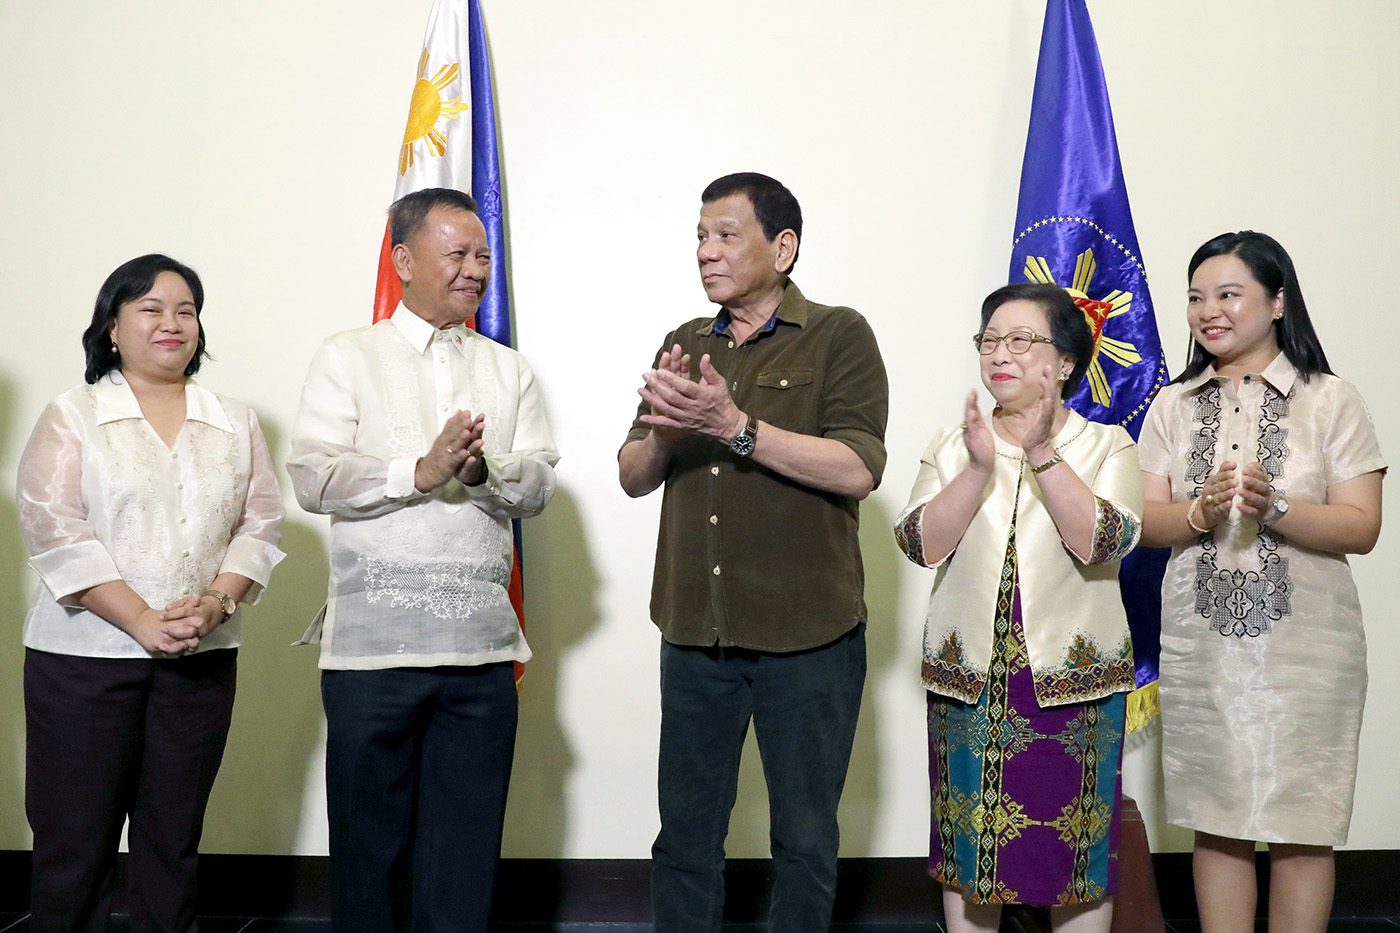 Despite NBI graft complaint, Duterte still trusts Lapeña – Panelo